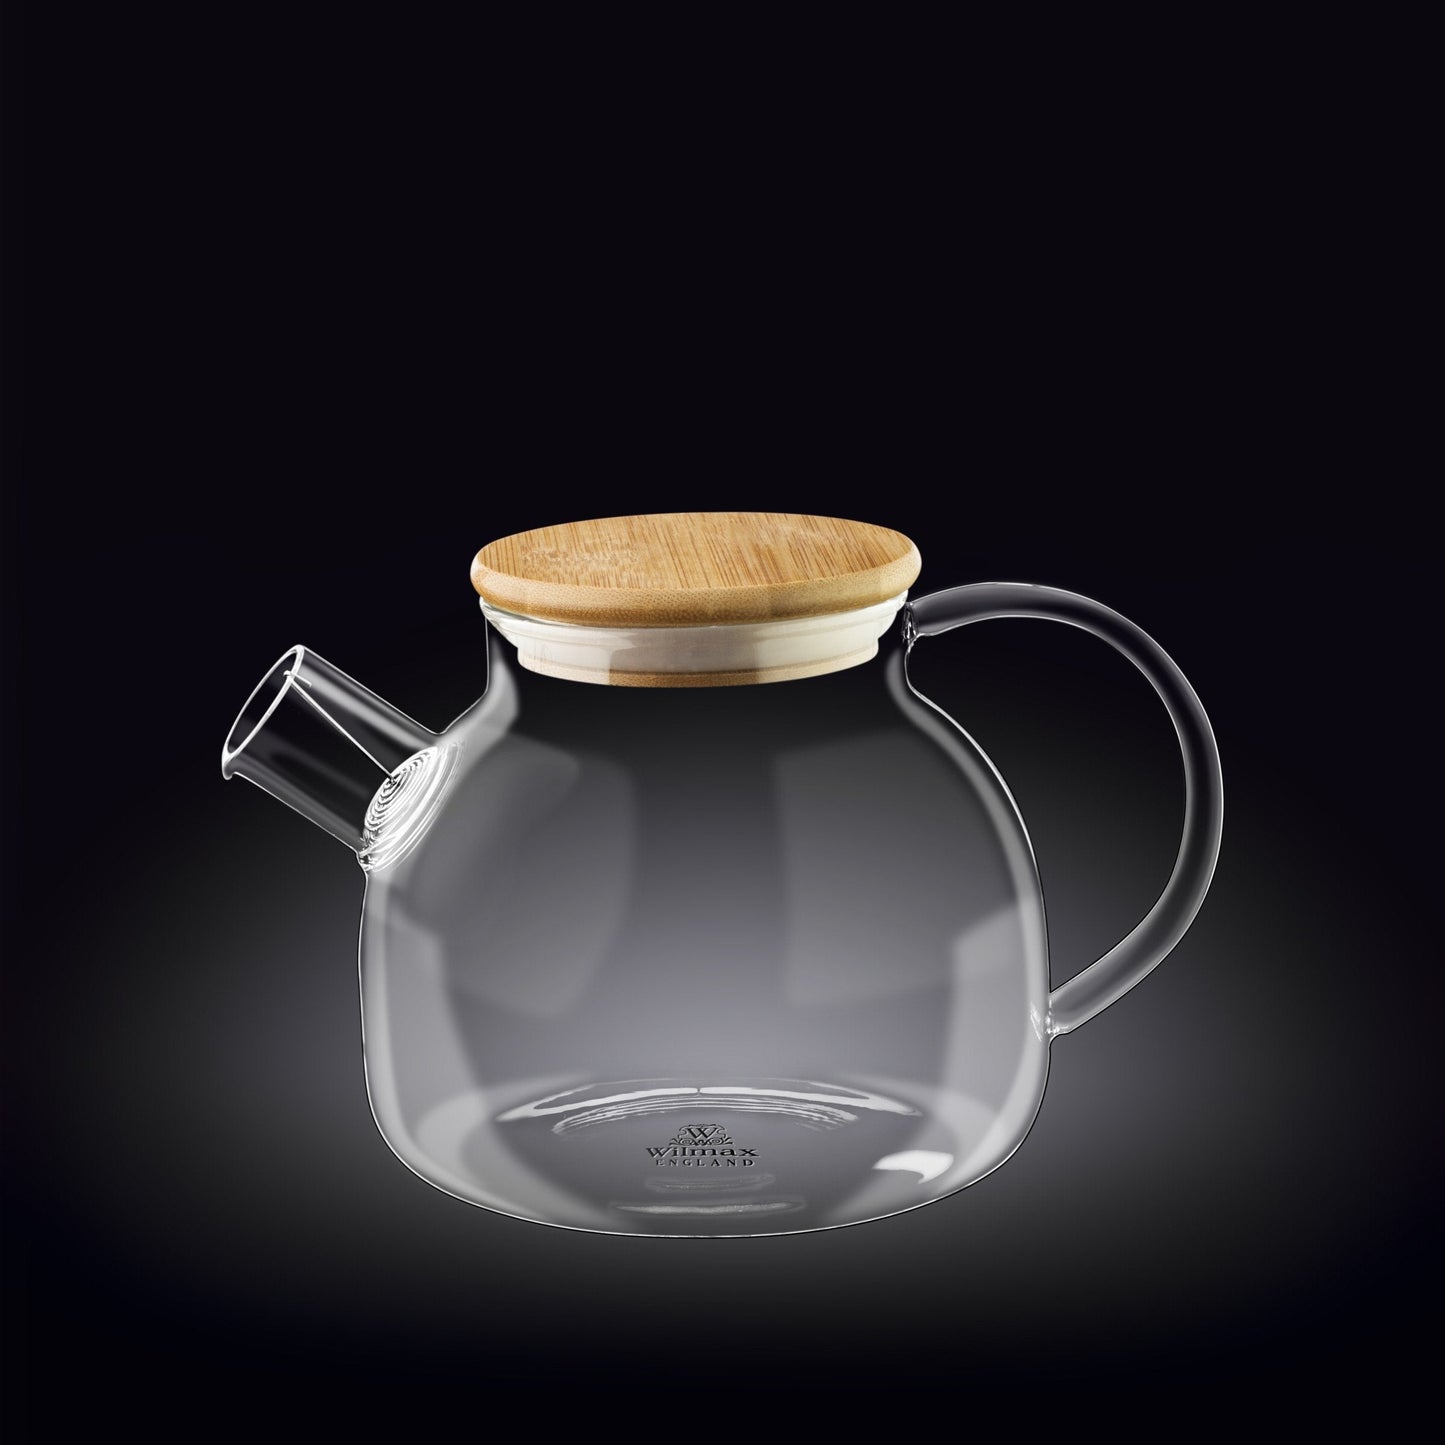 32oz Thermo Glass Tea Pot: Elegance for Perfect Brews